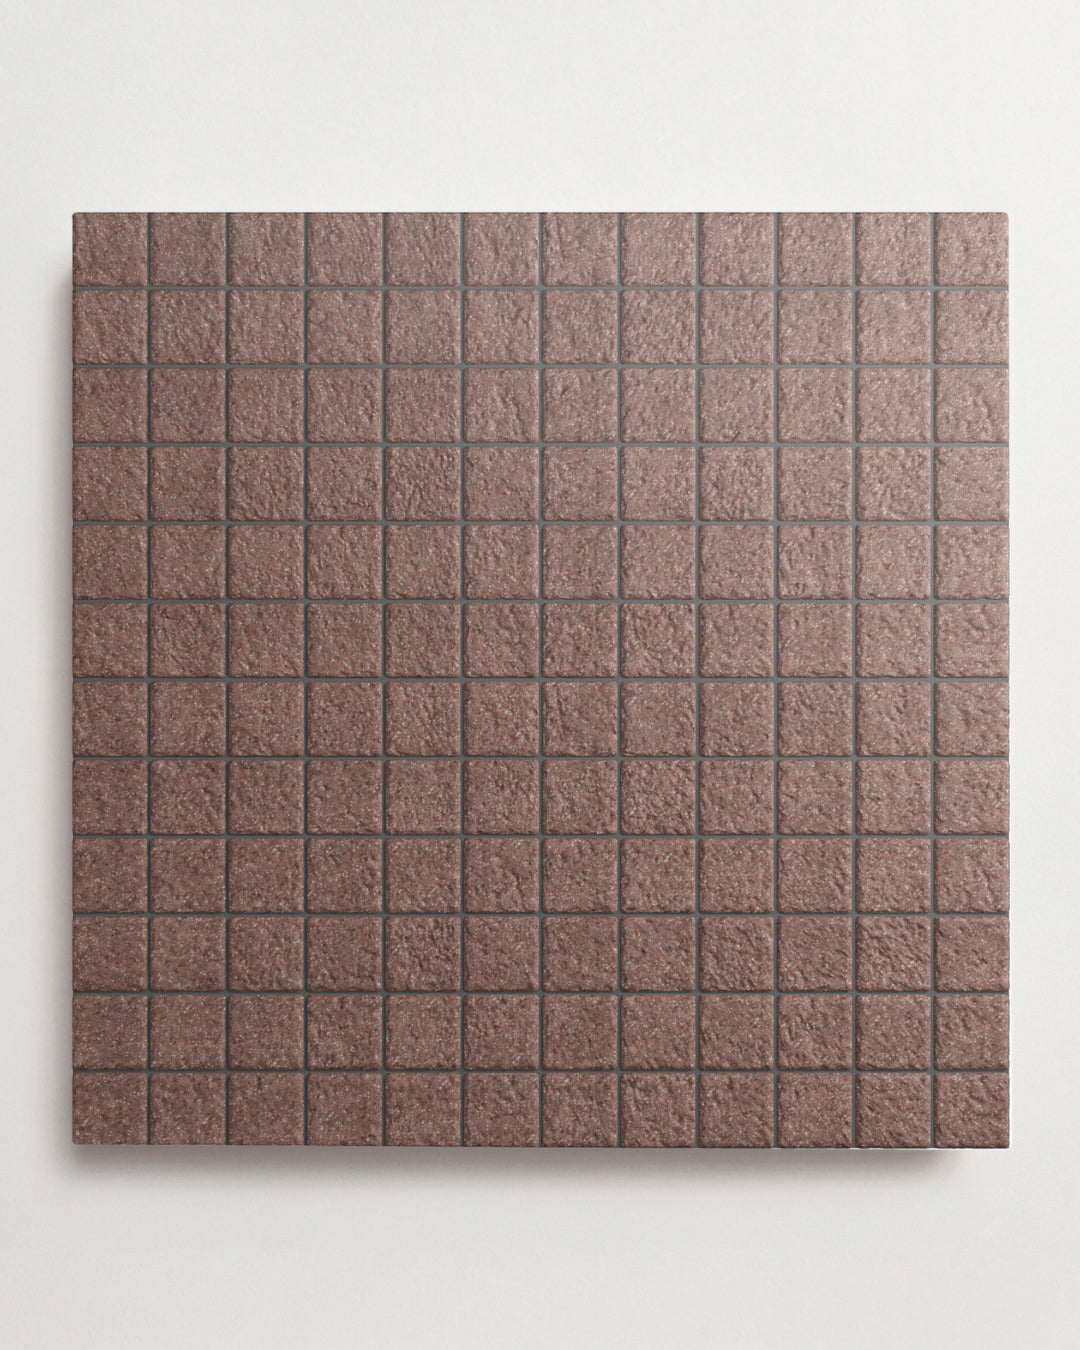 Small square reddish brown tiles.